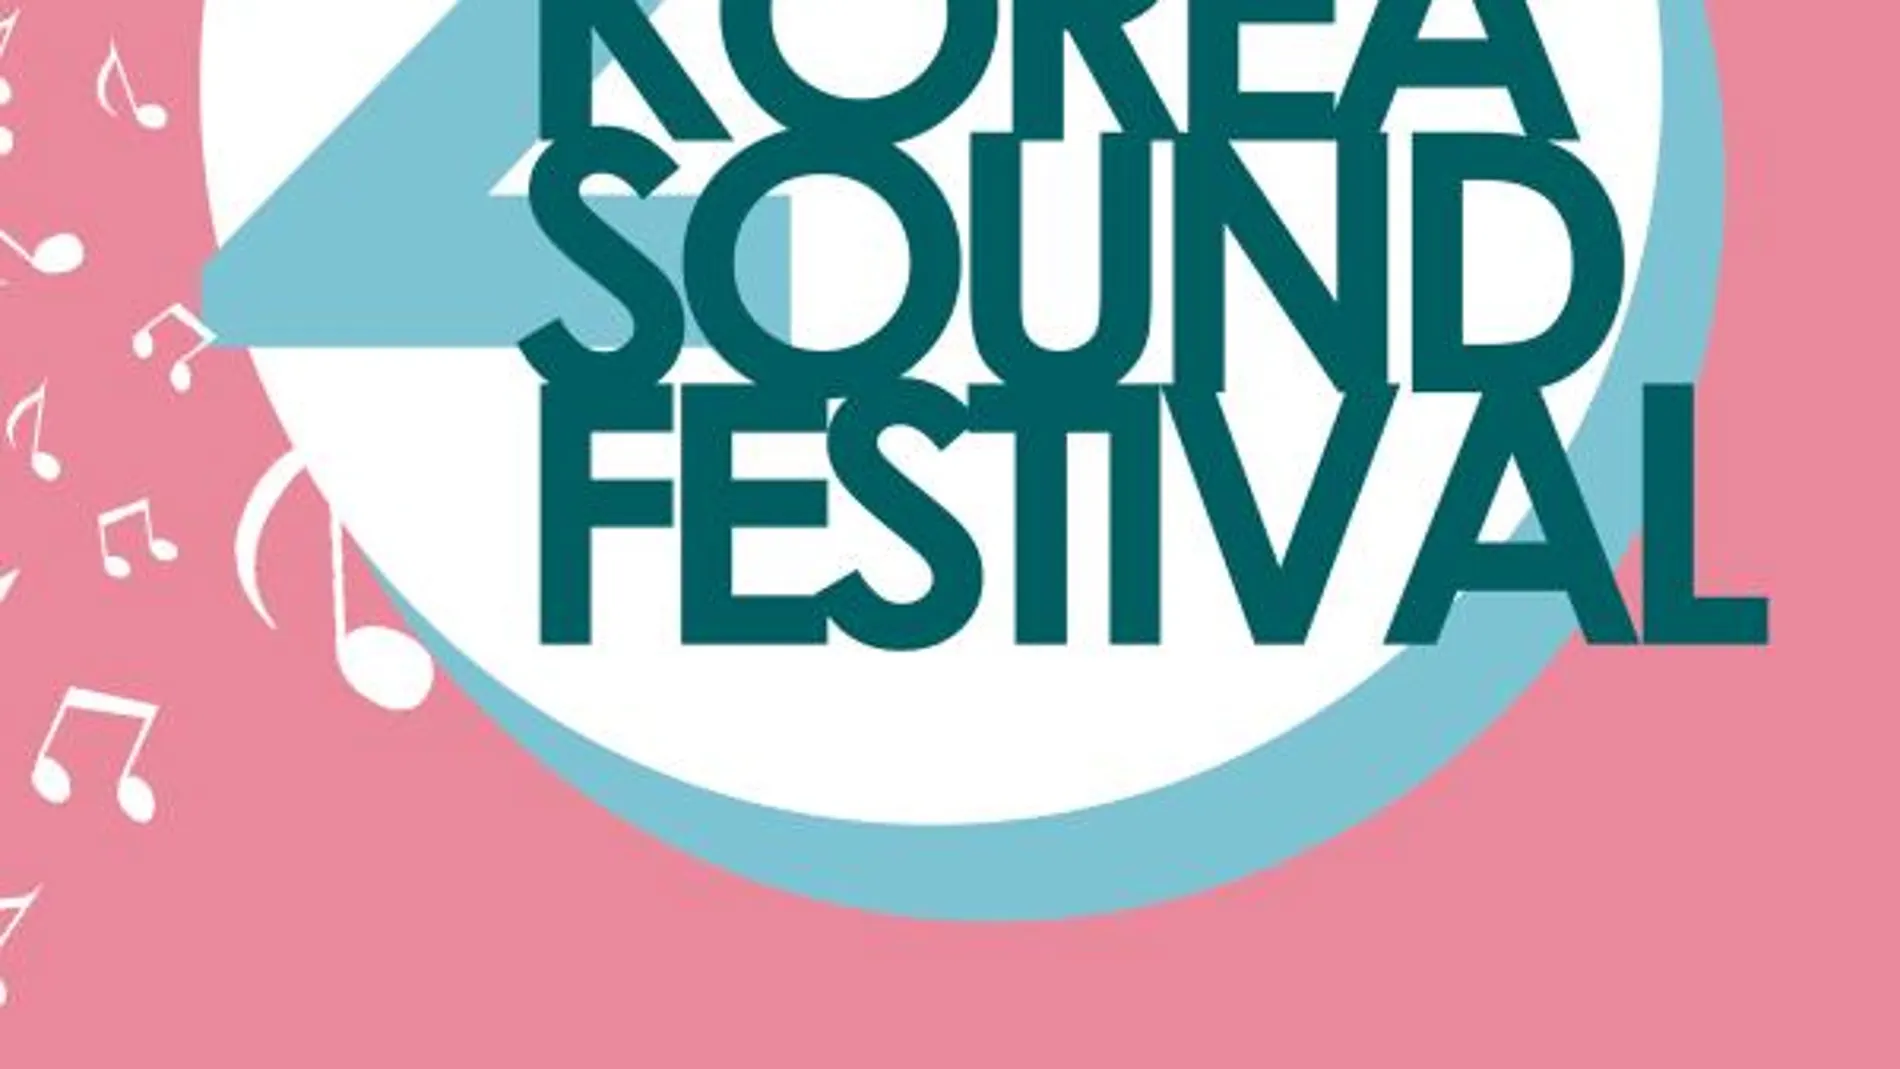 II Edición de Korea Sound Festival se celebra en Madrid